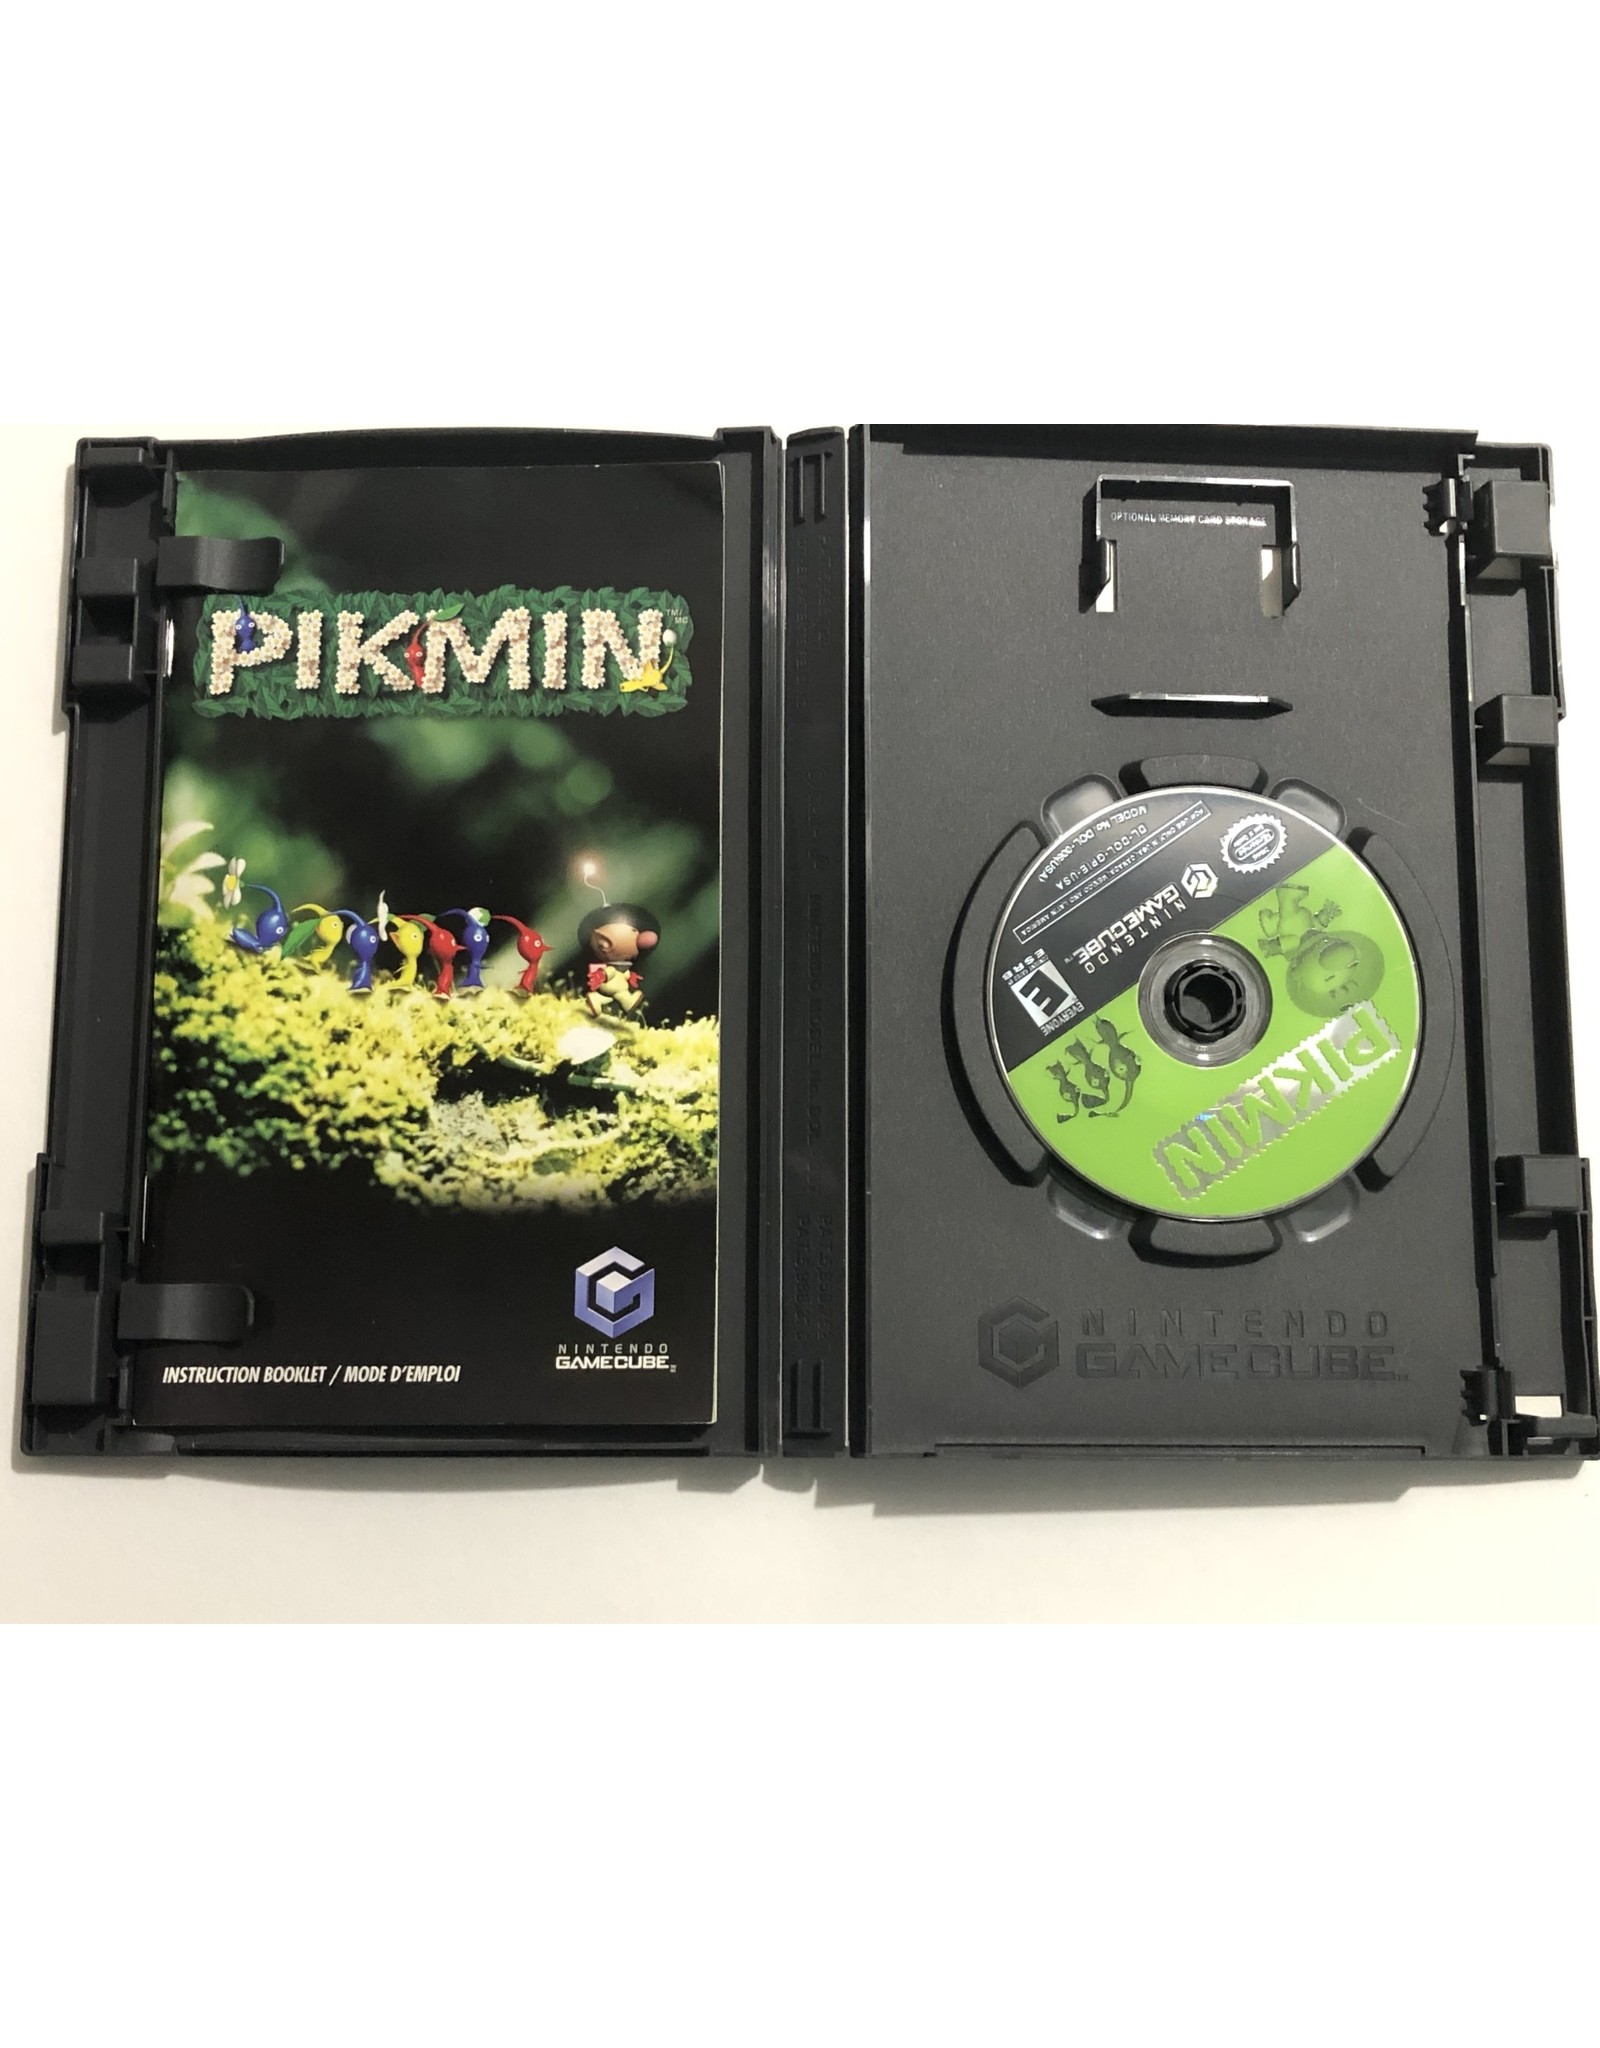 Nintendo Pikmin (Gamecube)